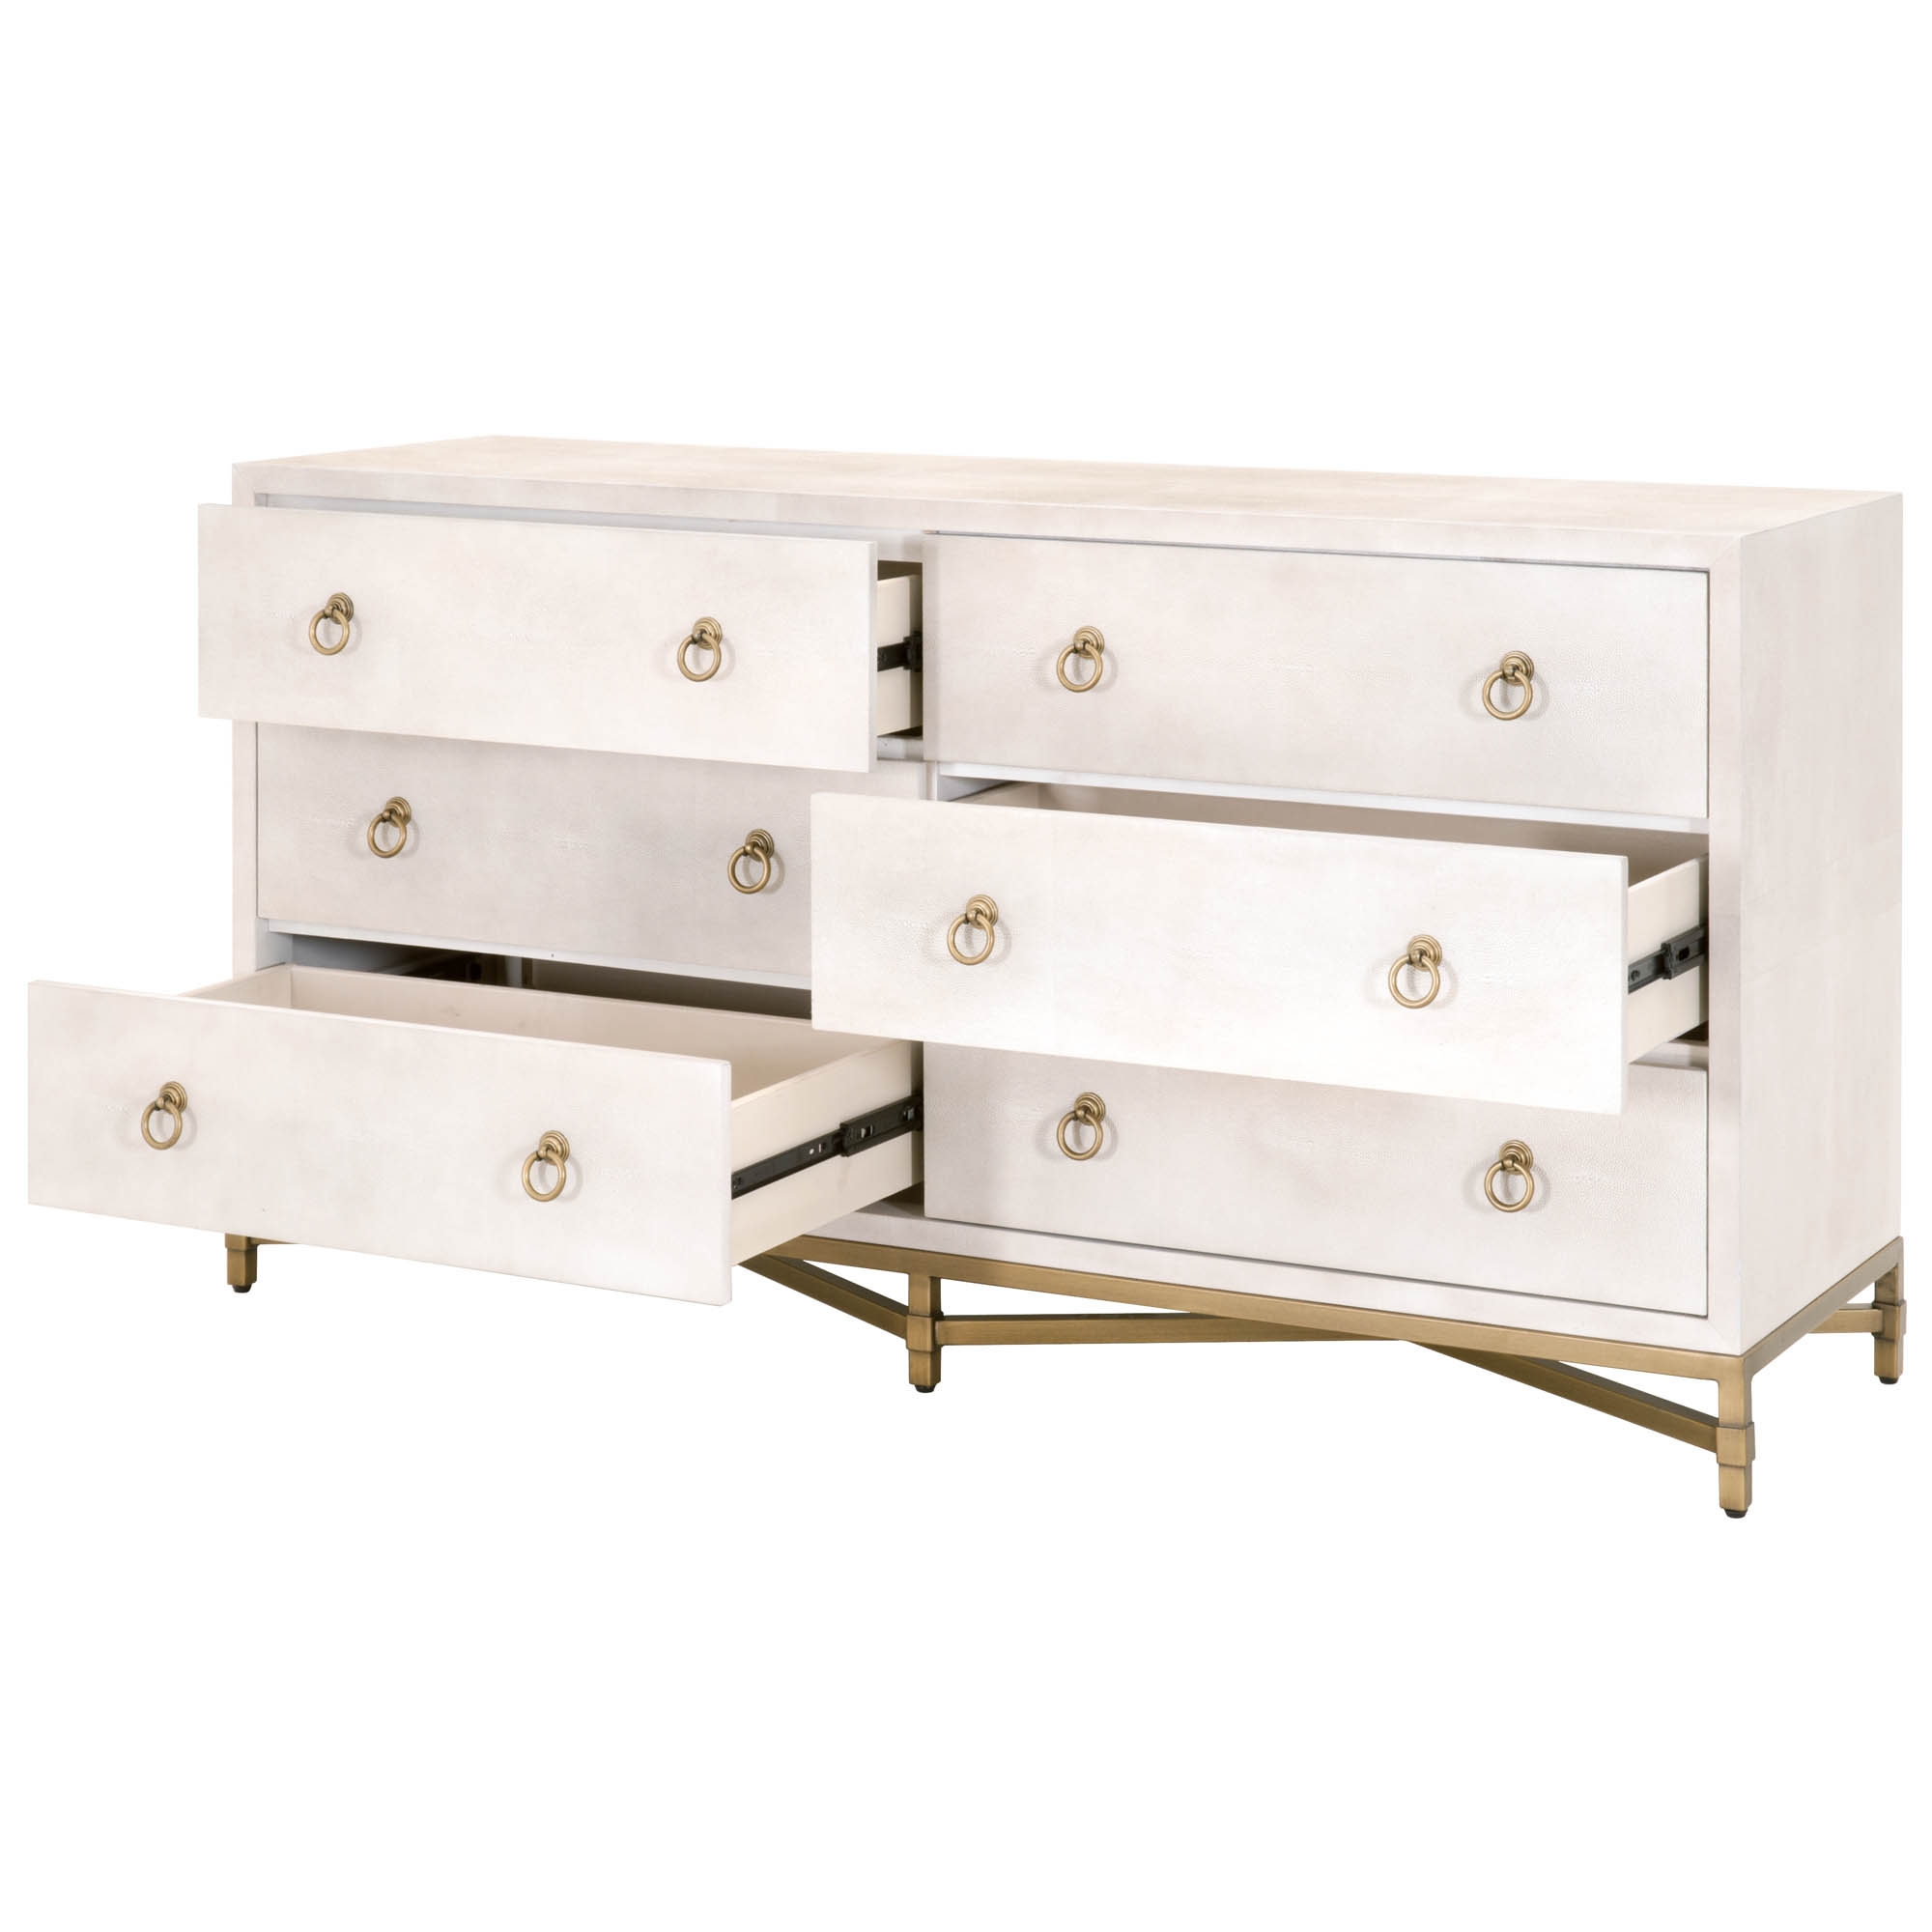 Colette Shagreen 6-Drawer Double Dresser, White & Gold - Image 4